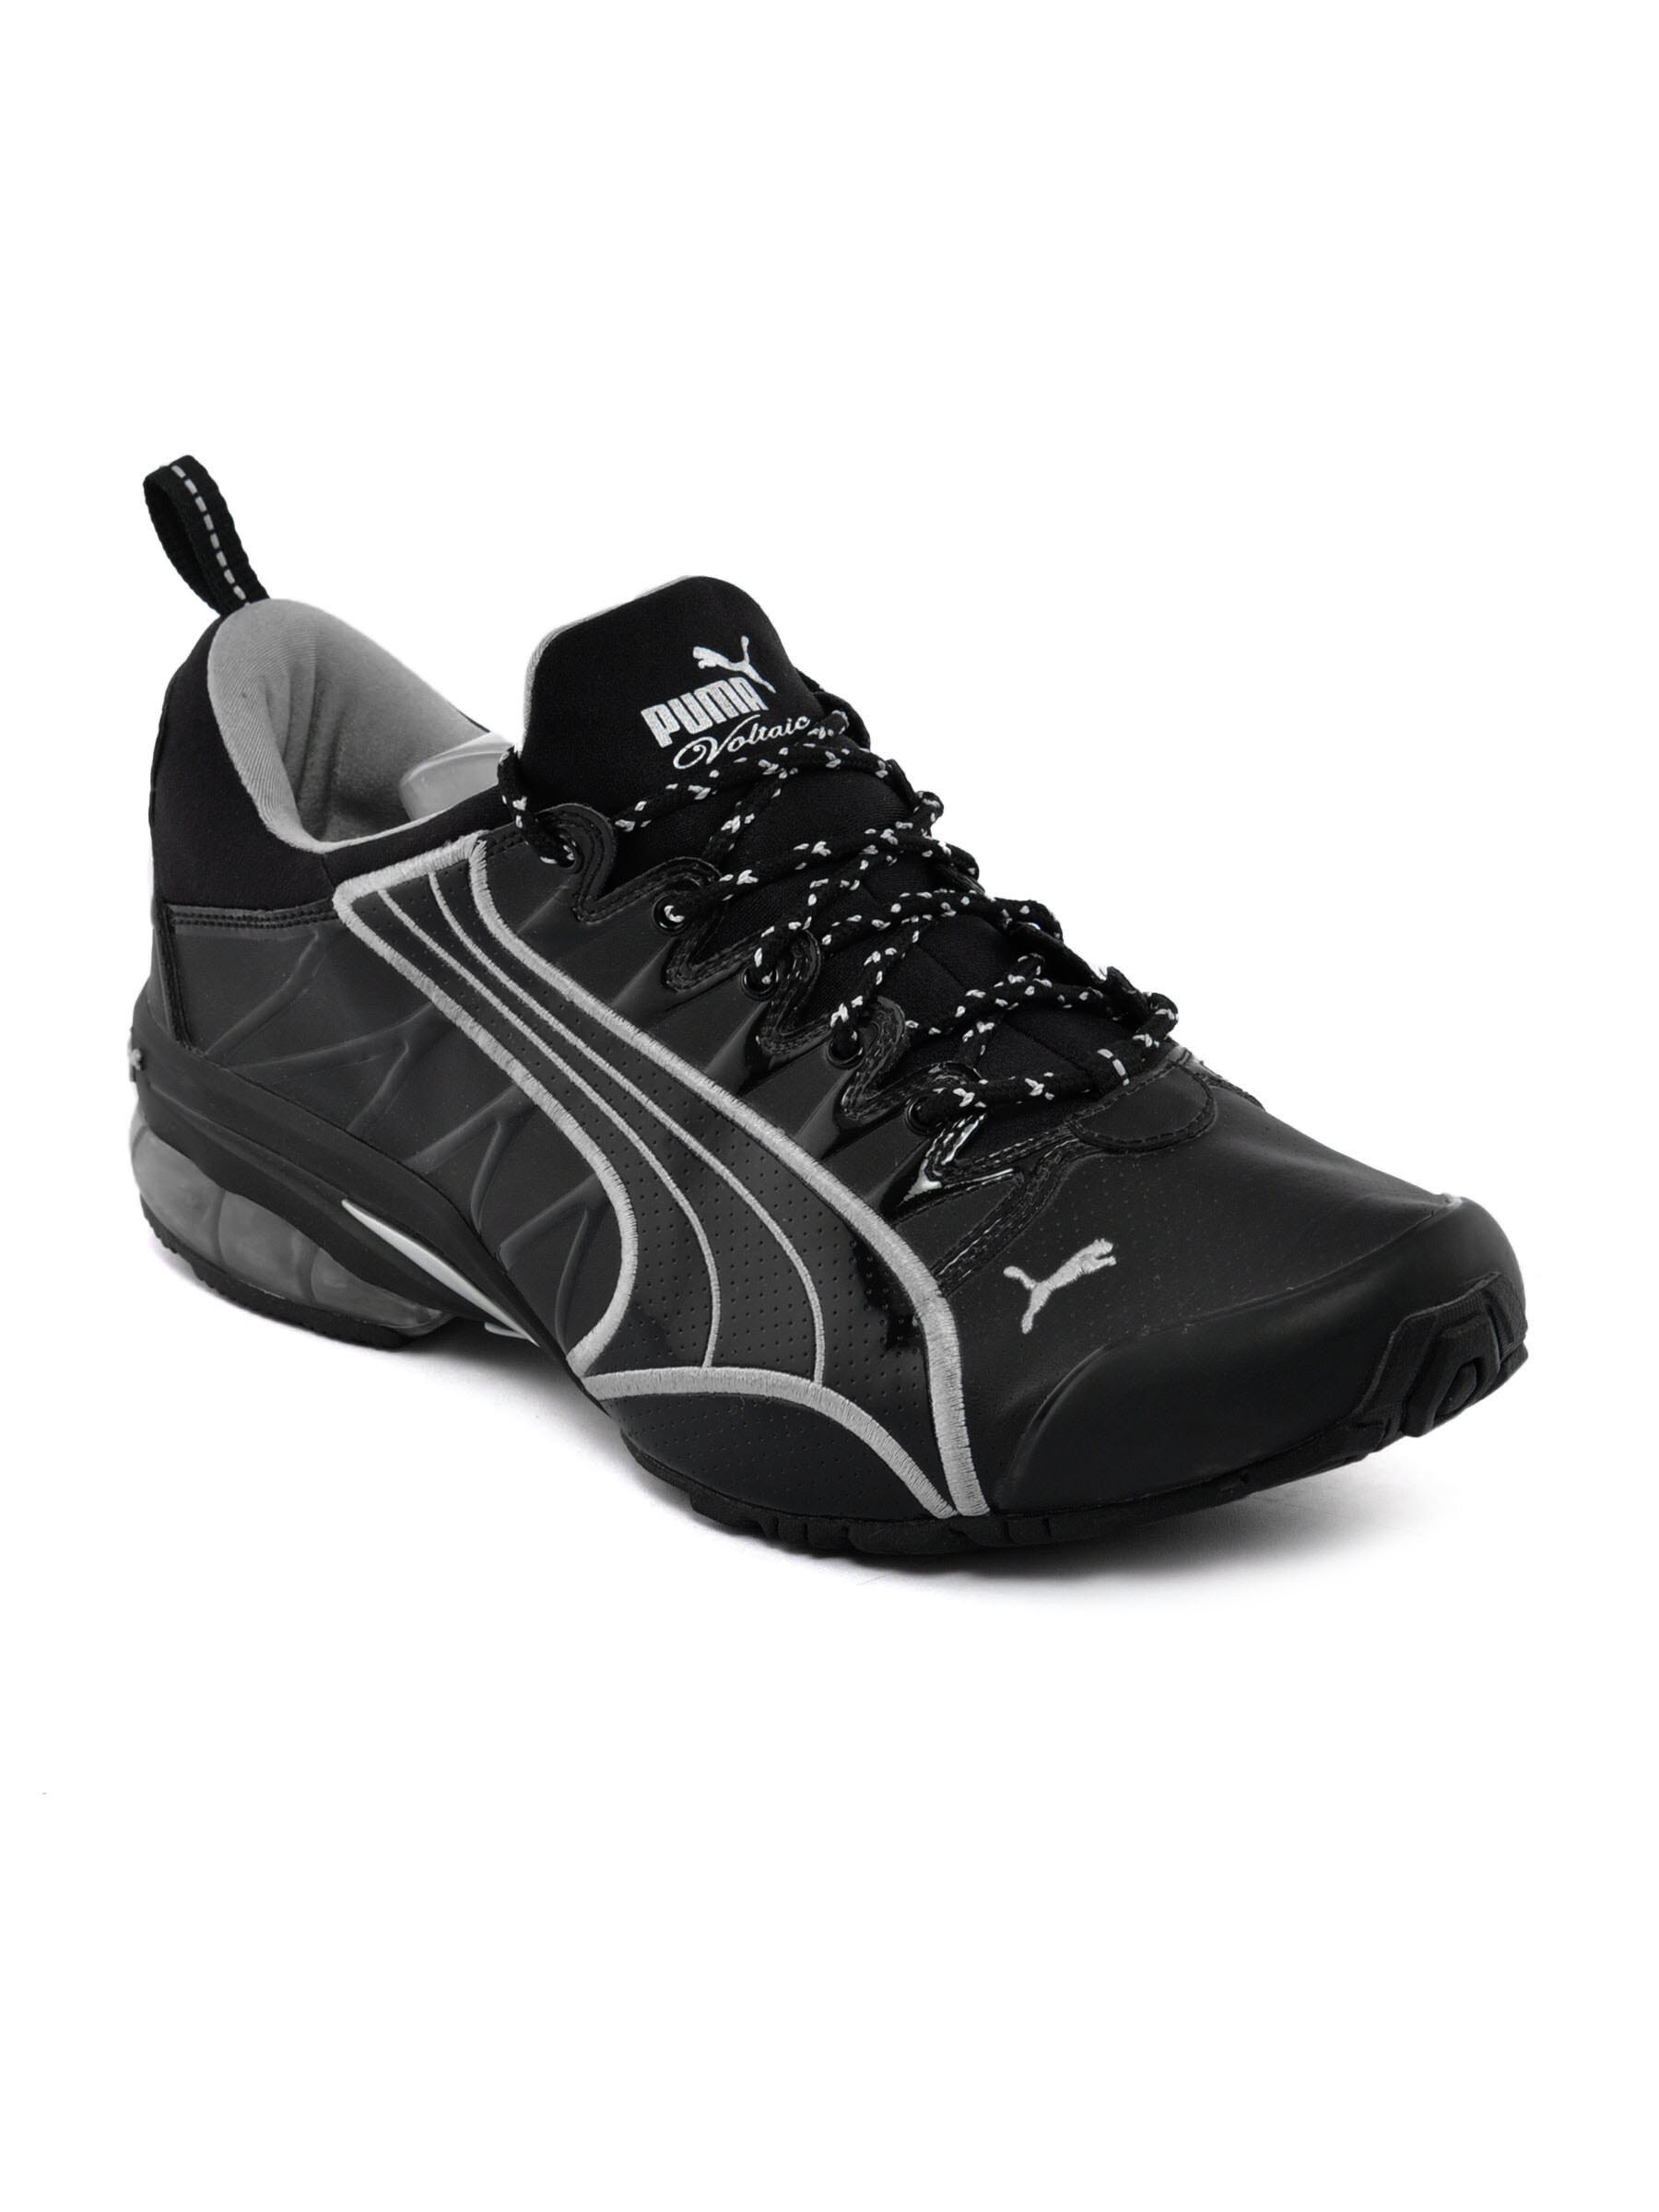 Puma Men Voltaic WP Black Sports Shoe